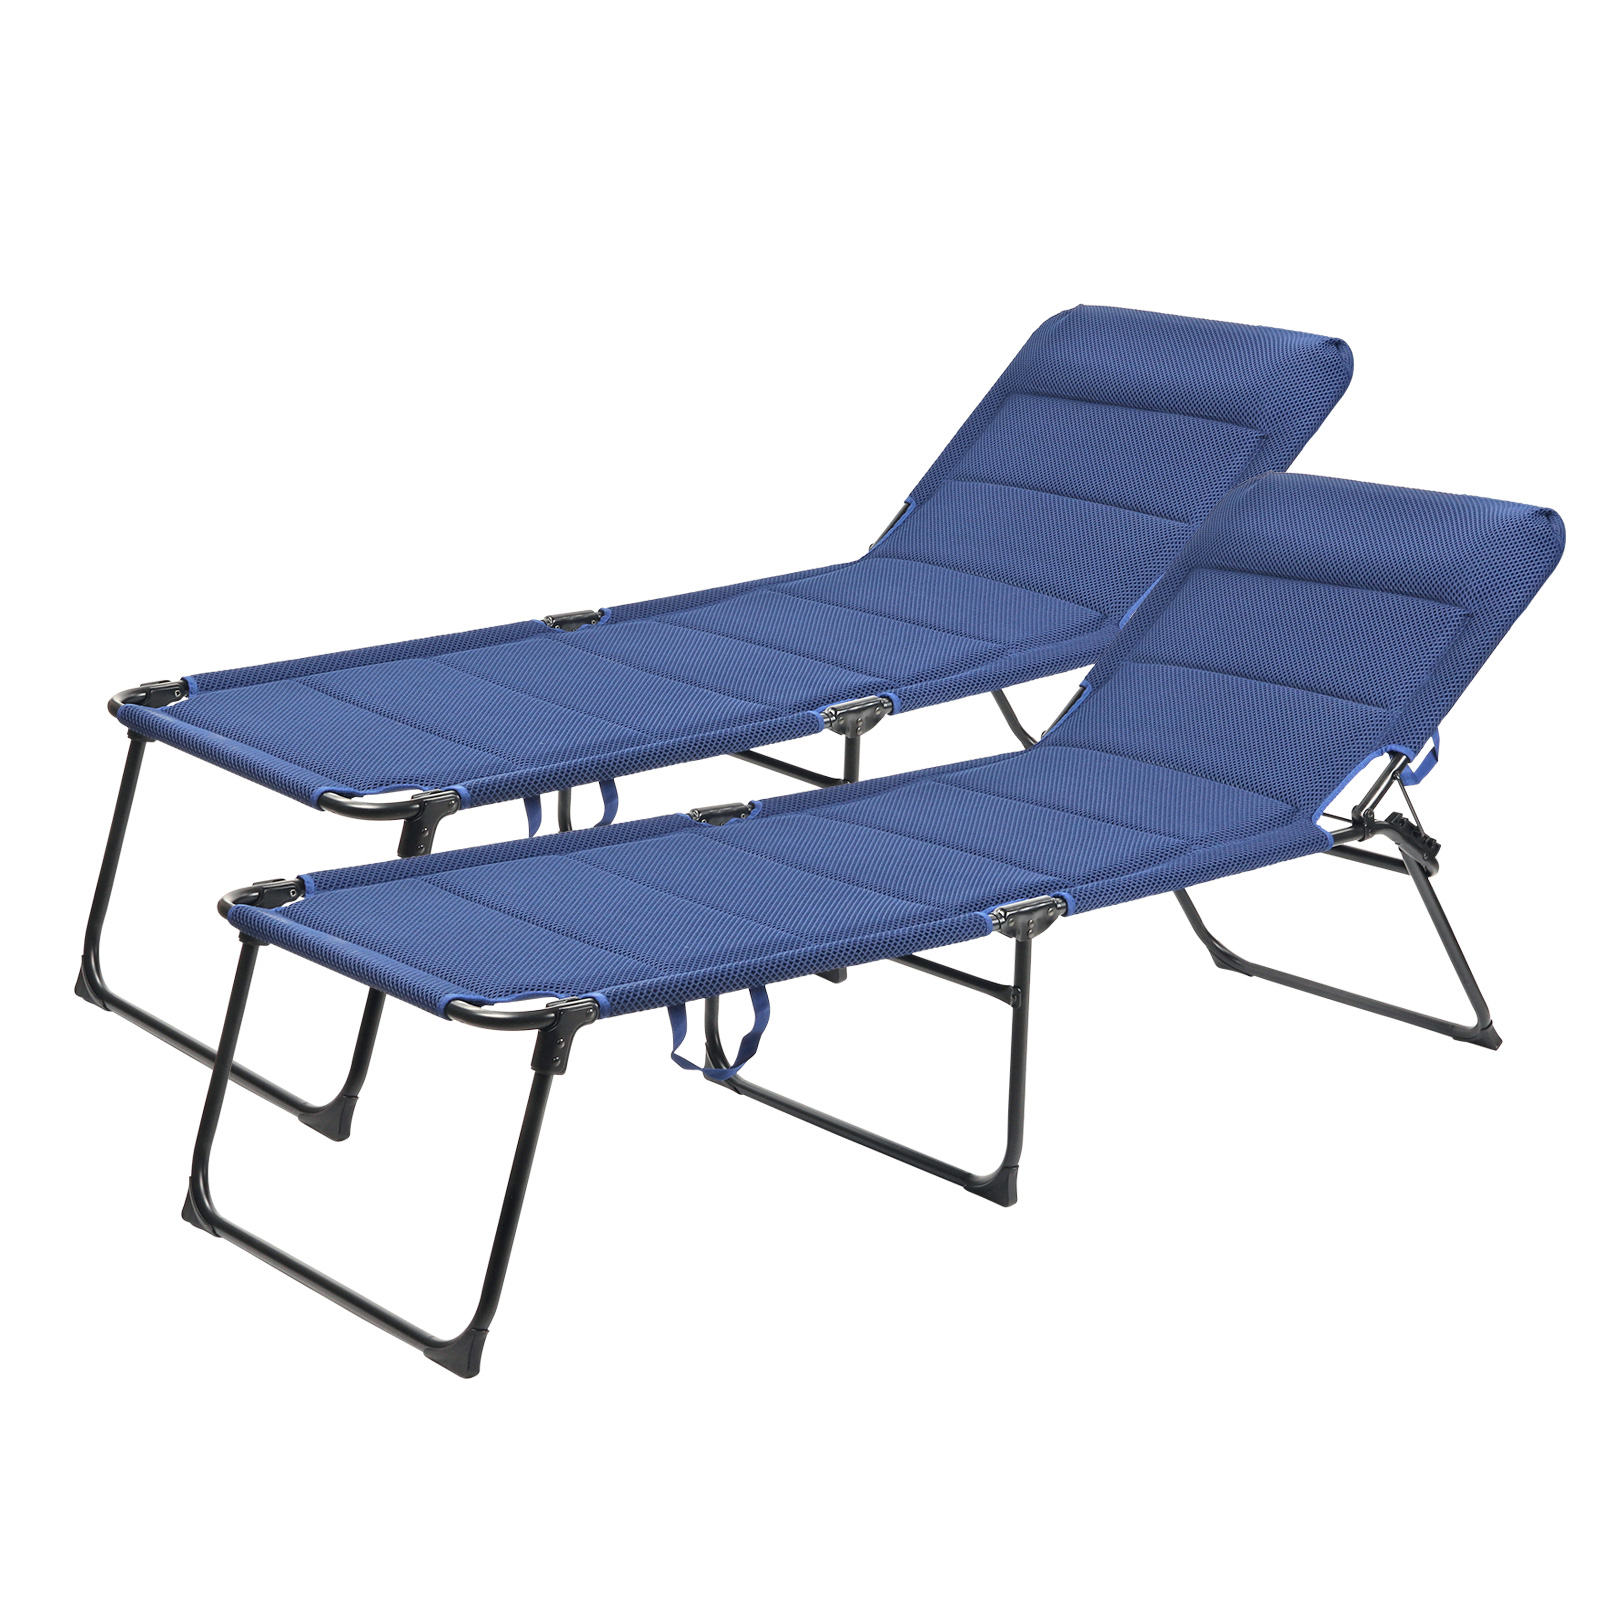 2x Via Mondo Campingliege Set "Grande Azul" 3 fach verstellbar Alu Rahmen comfortabel stabil